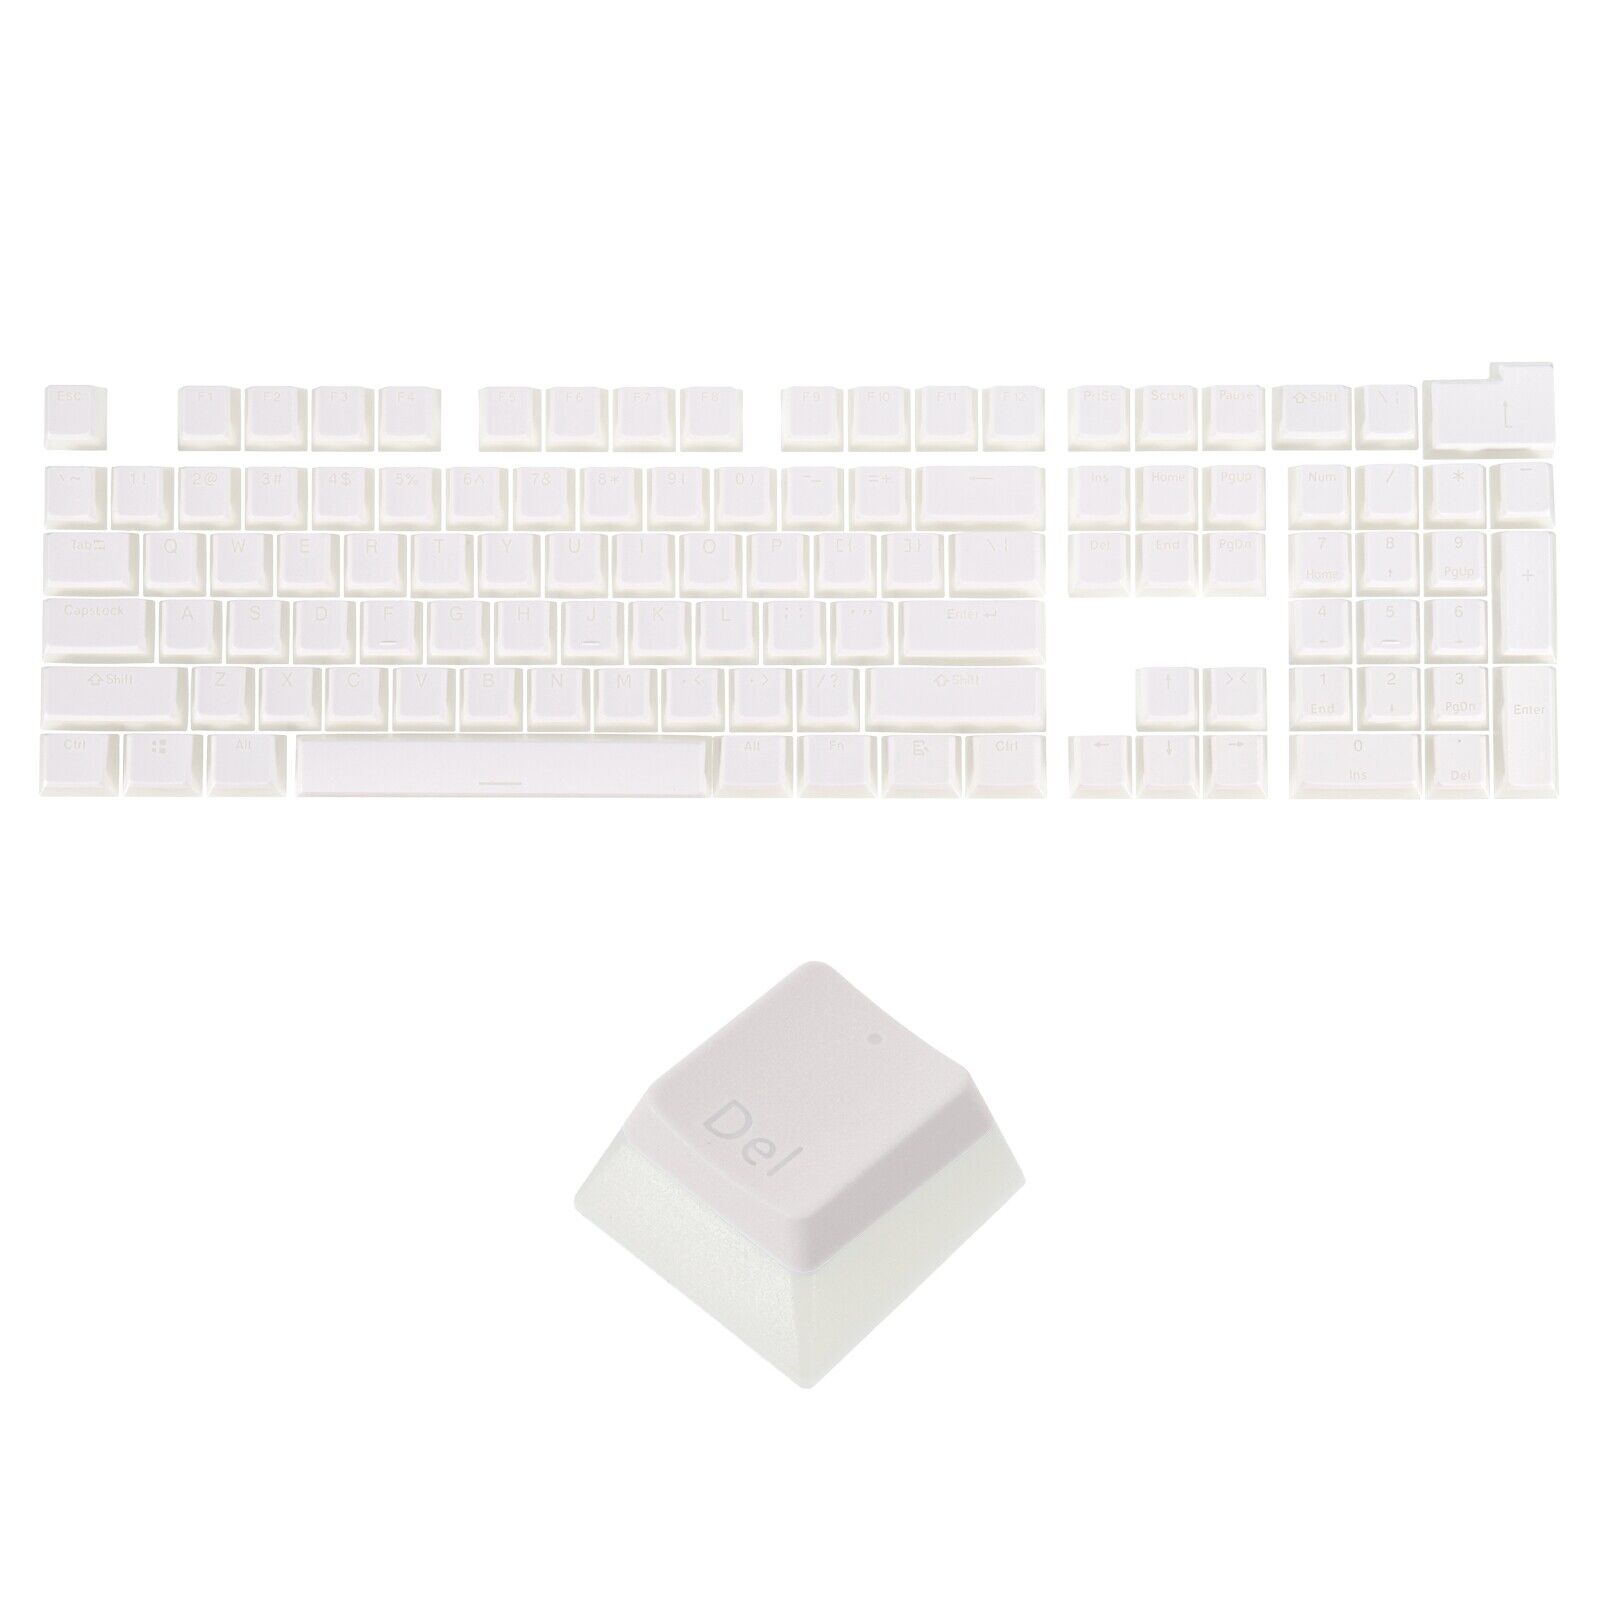 104 Keys Pudding Keycap PBT for 61/87/104 Mechanical Keyboard, Cream White